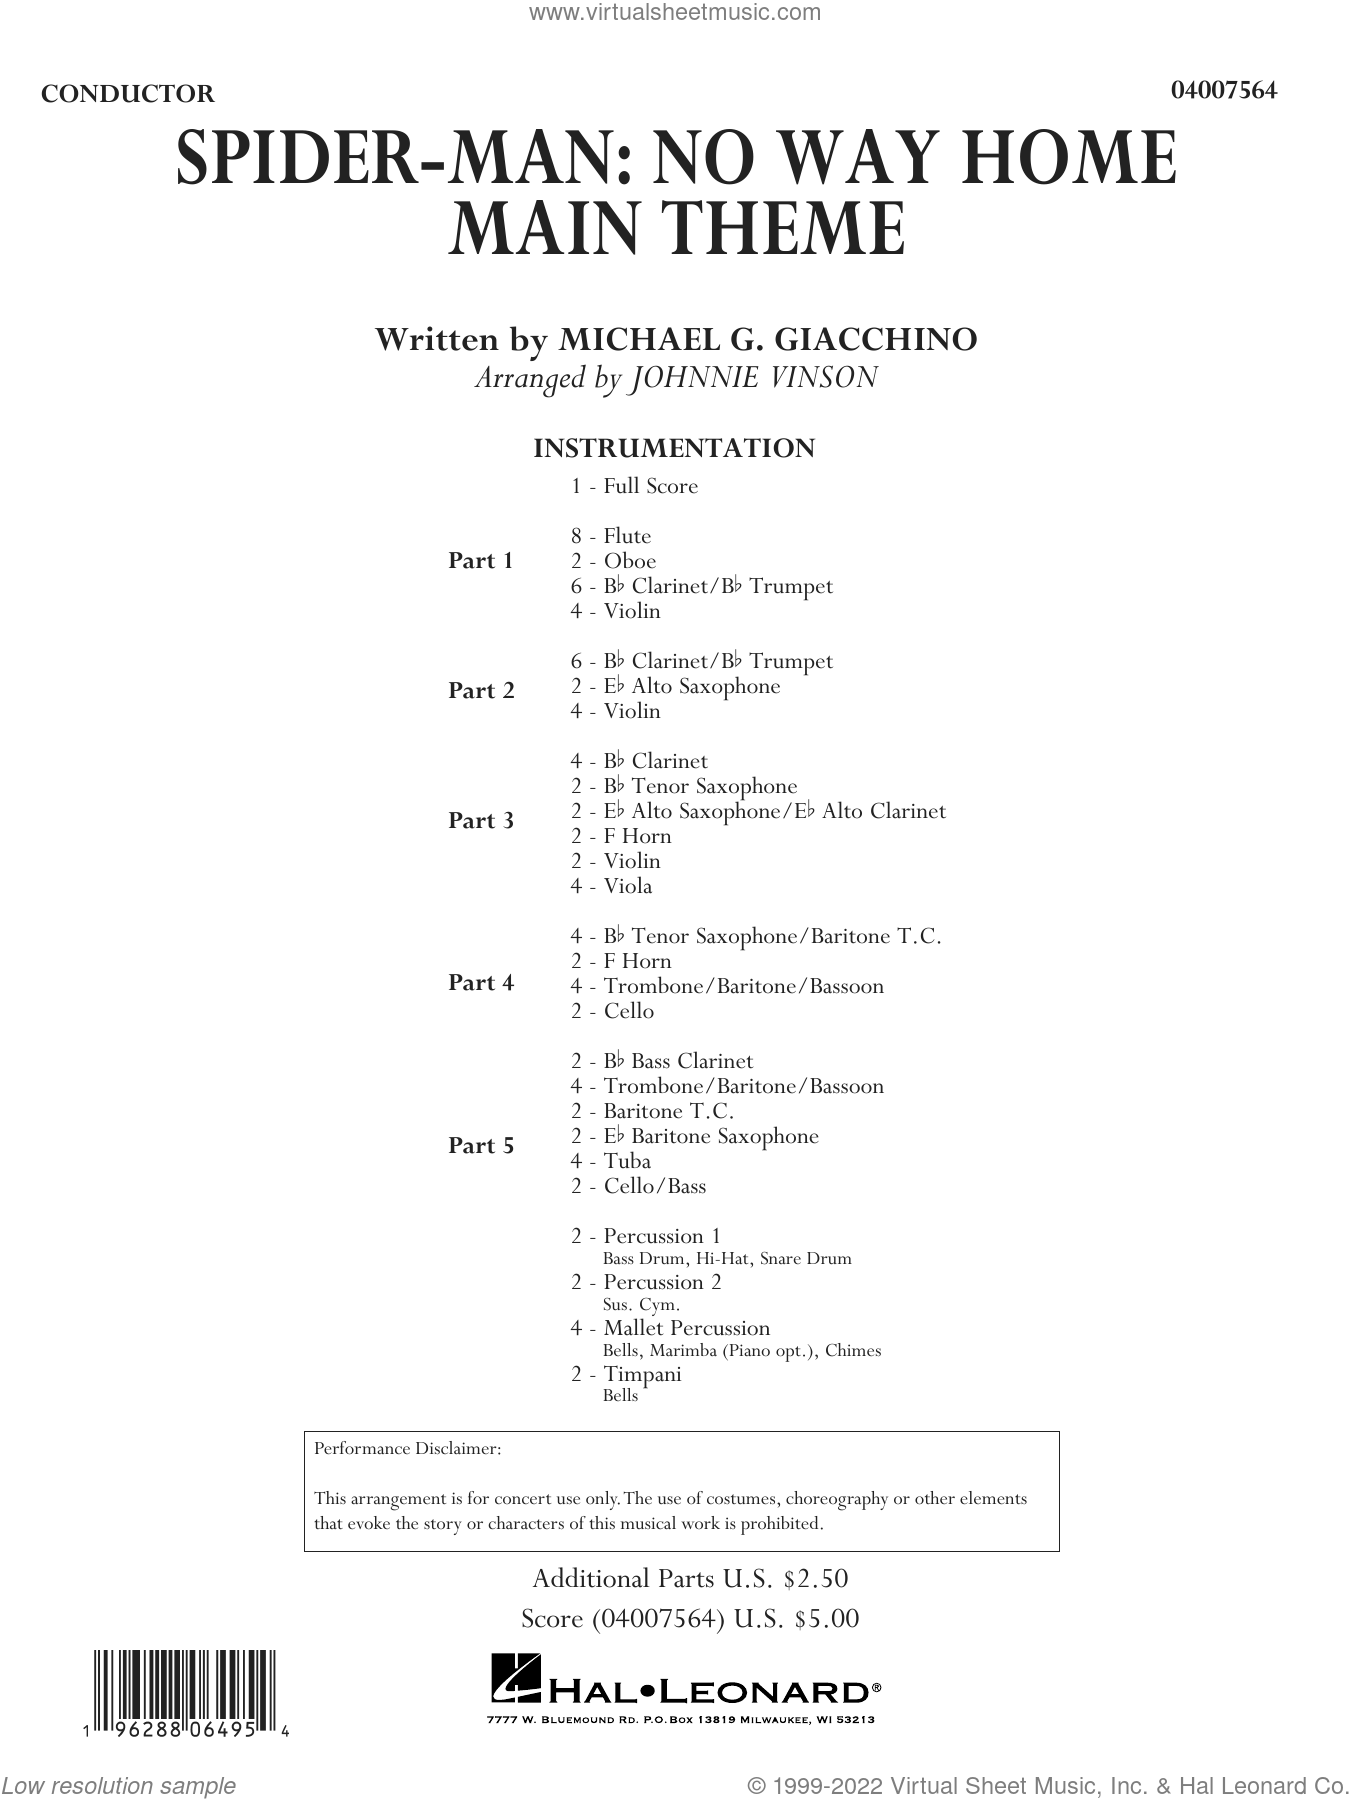 Spider-Man: No Way Home Main Theme (arr. Vinson) - Pt.1 - Flute Sheet Music, Michael Giacchino